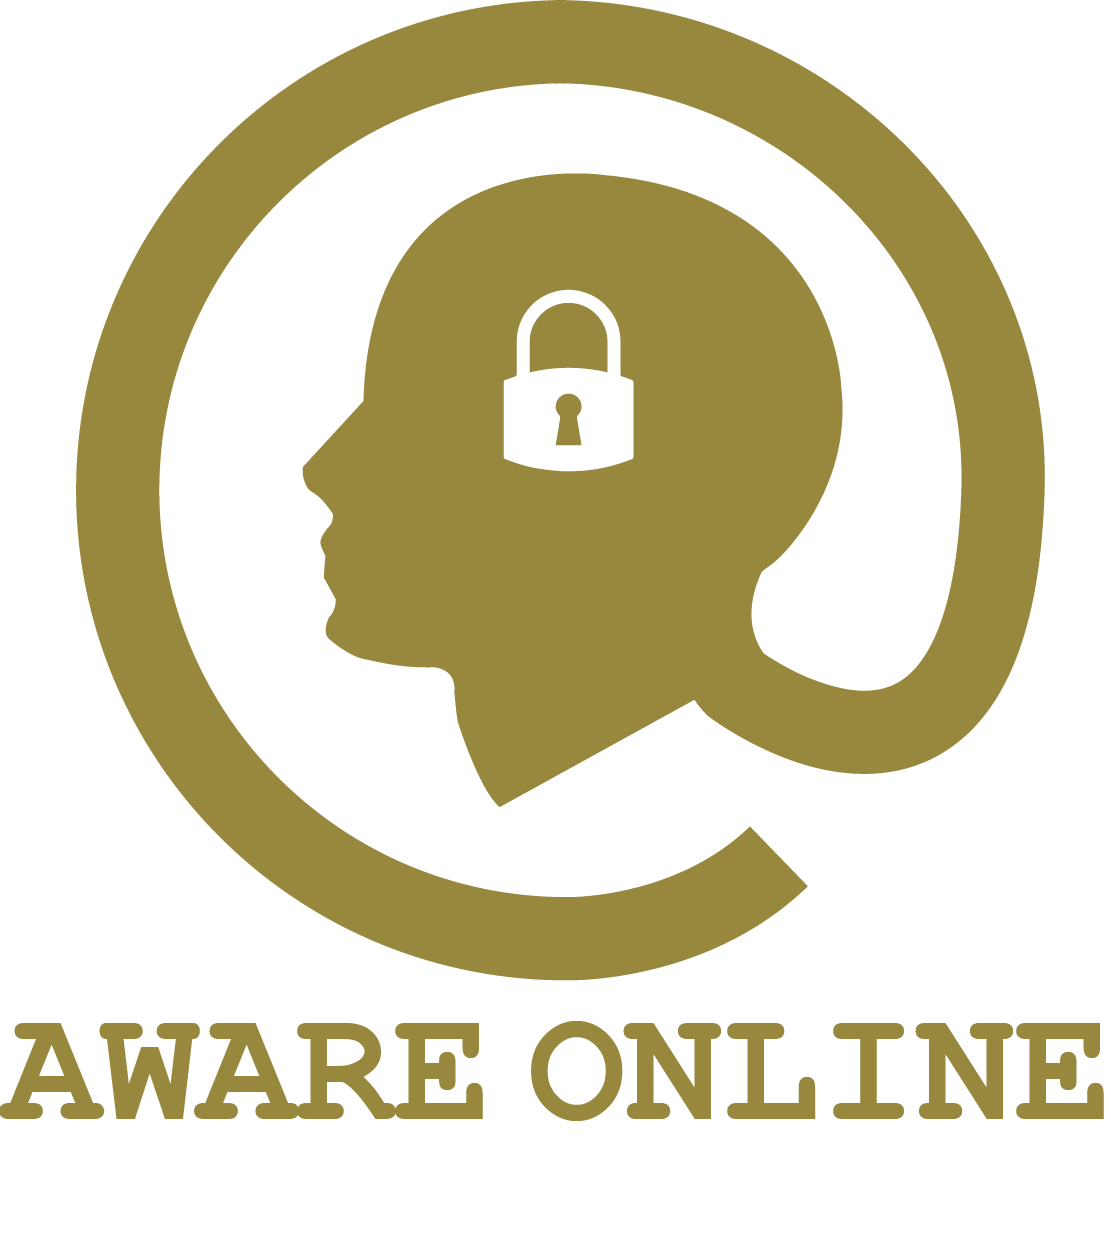 Aware Online